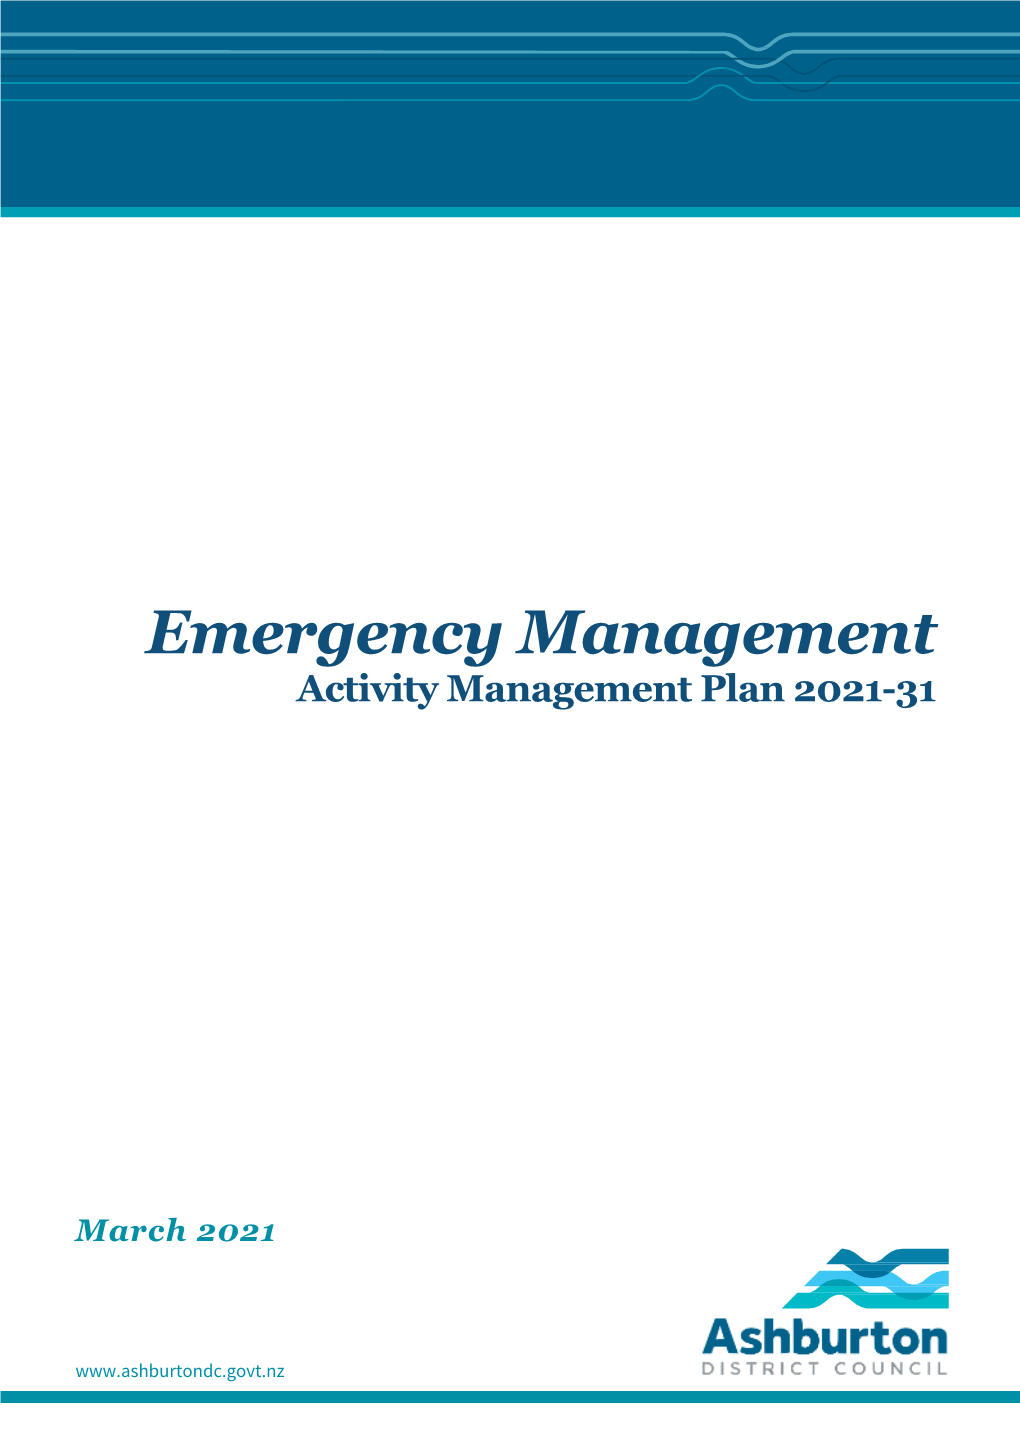 Emergency Management AMP 2021-31.Pdf